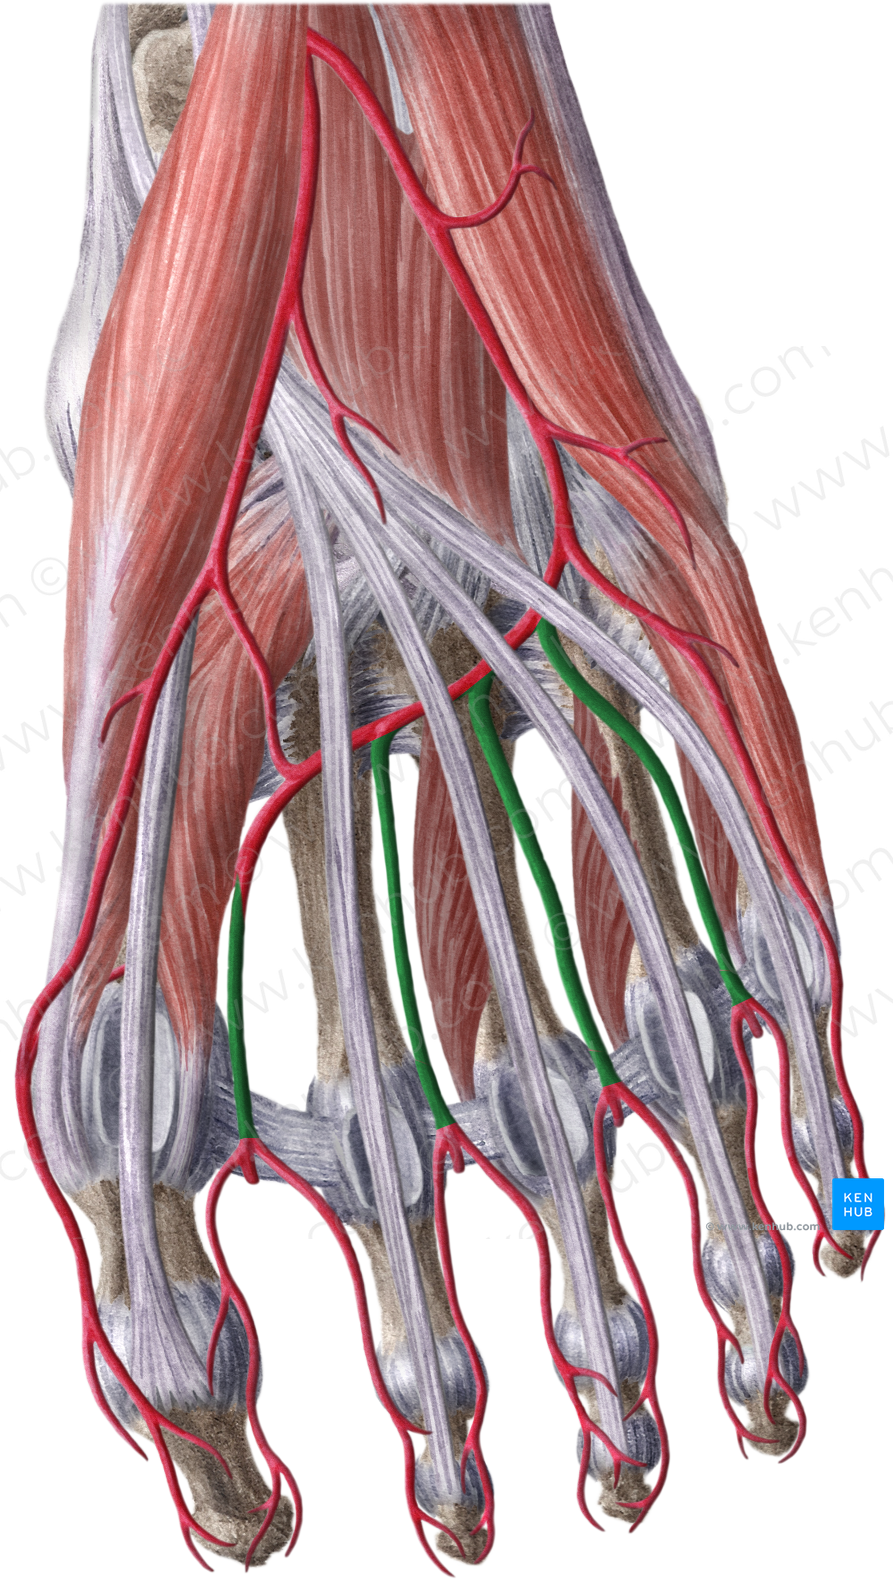 Plantar metatarsal arteries (#1175)